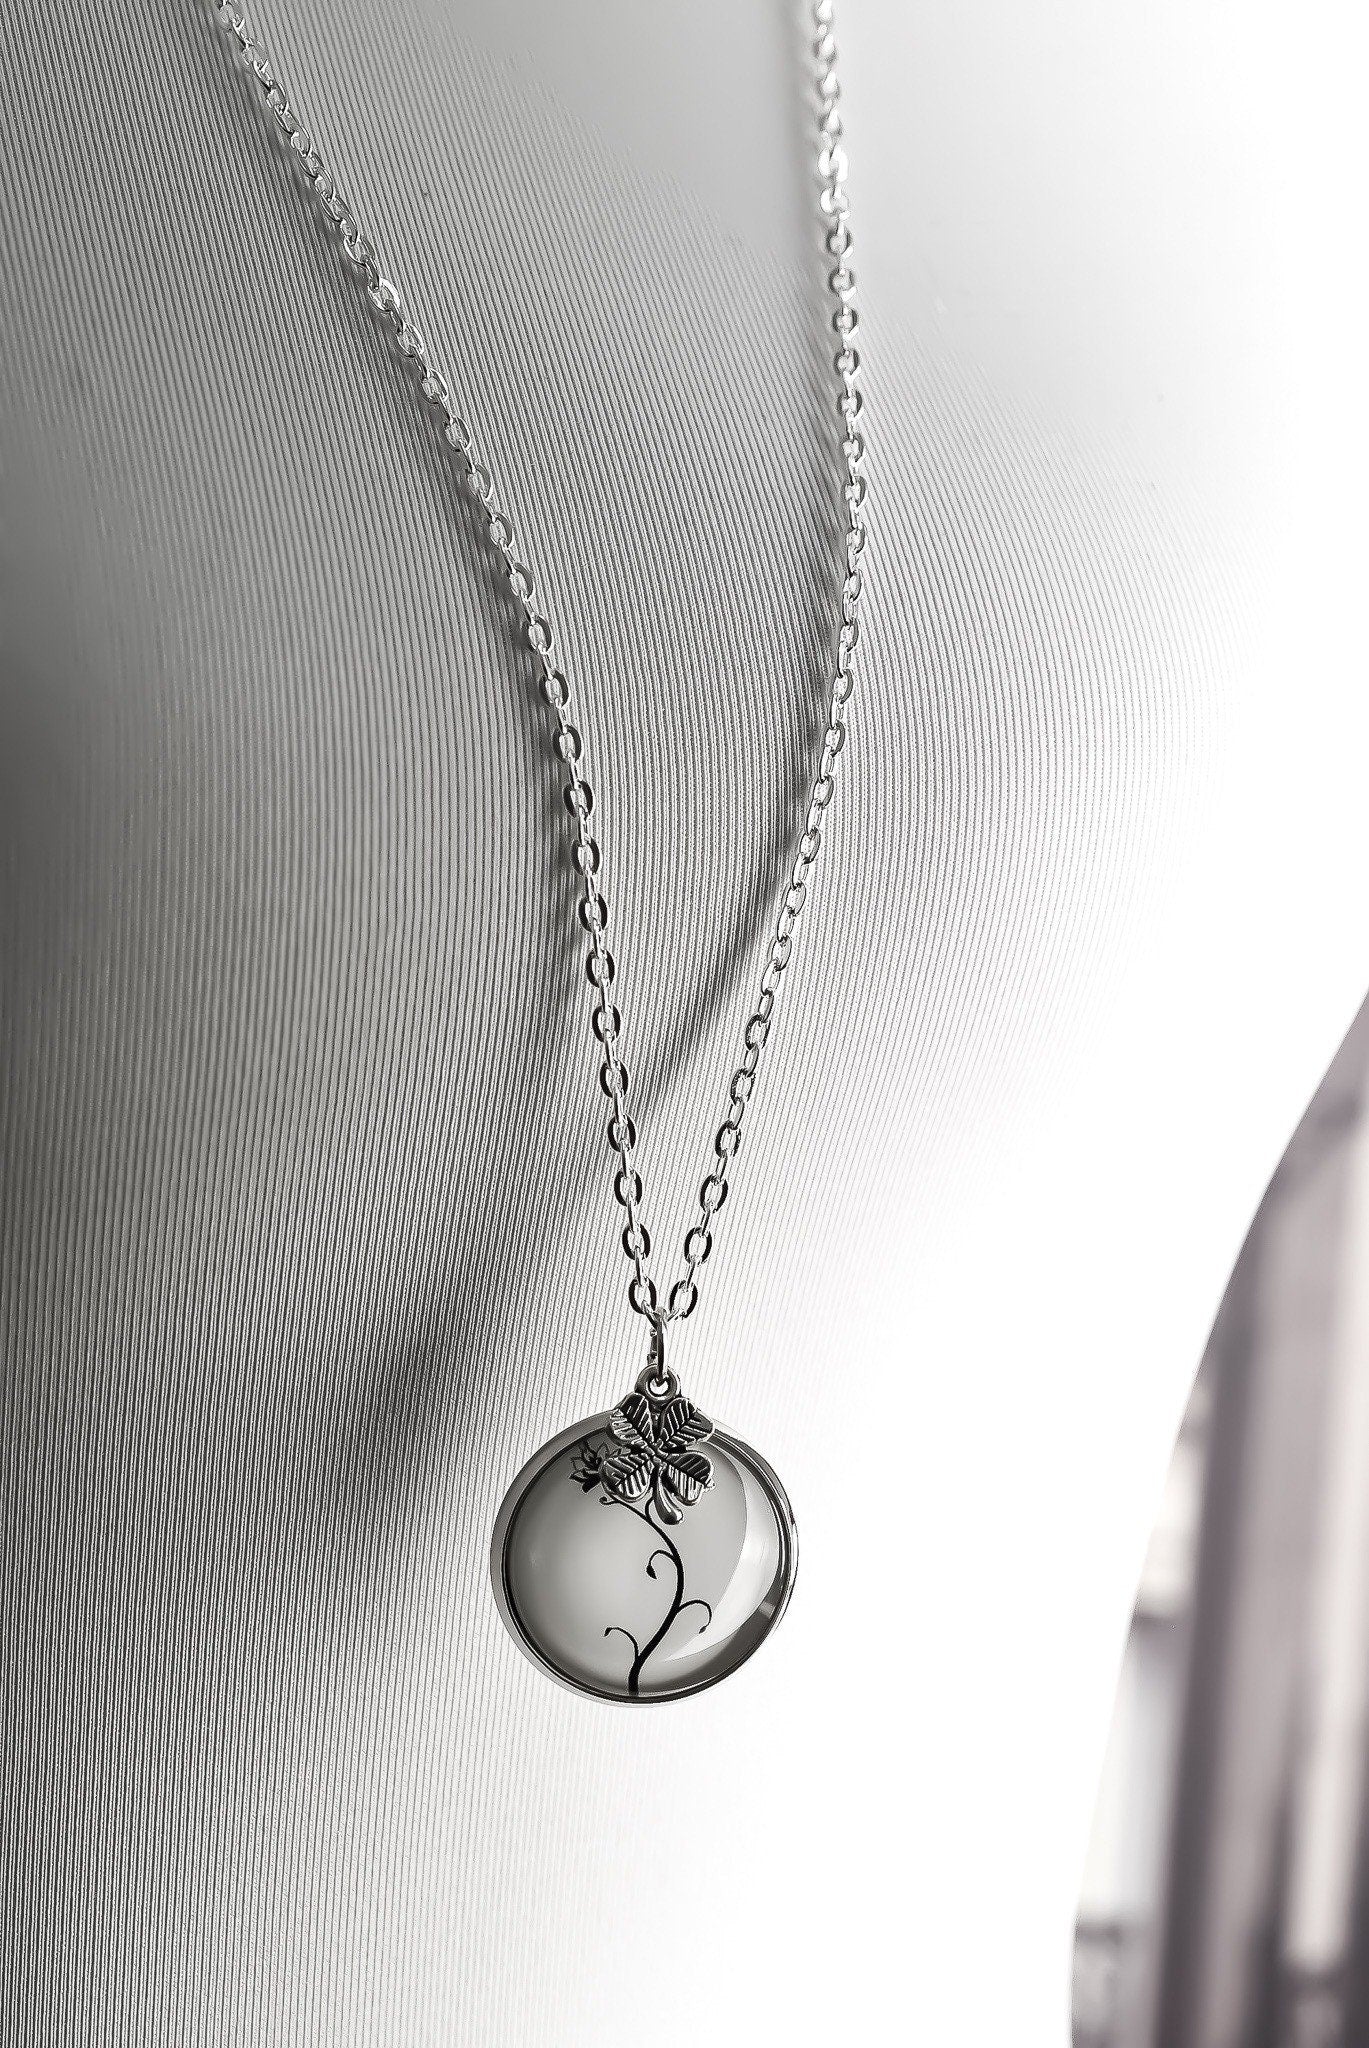 Clover Bird Blossom Glass Pendant - Floral Shabby Jewelry - Minimalist Gift Idea - VIK-34